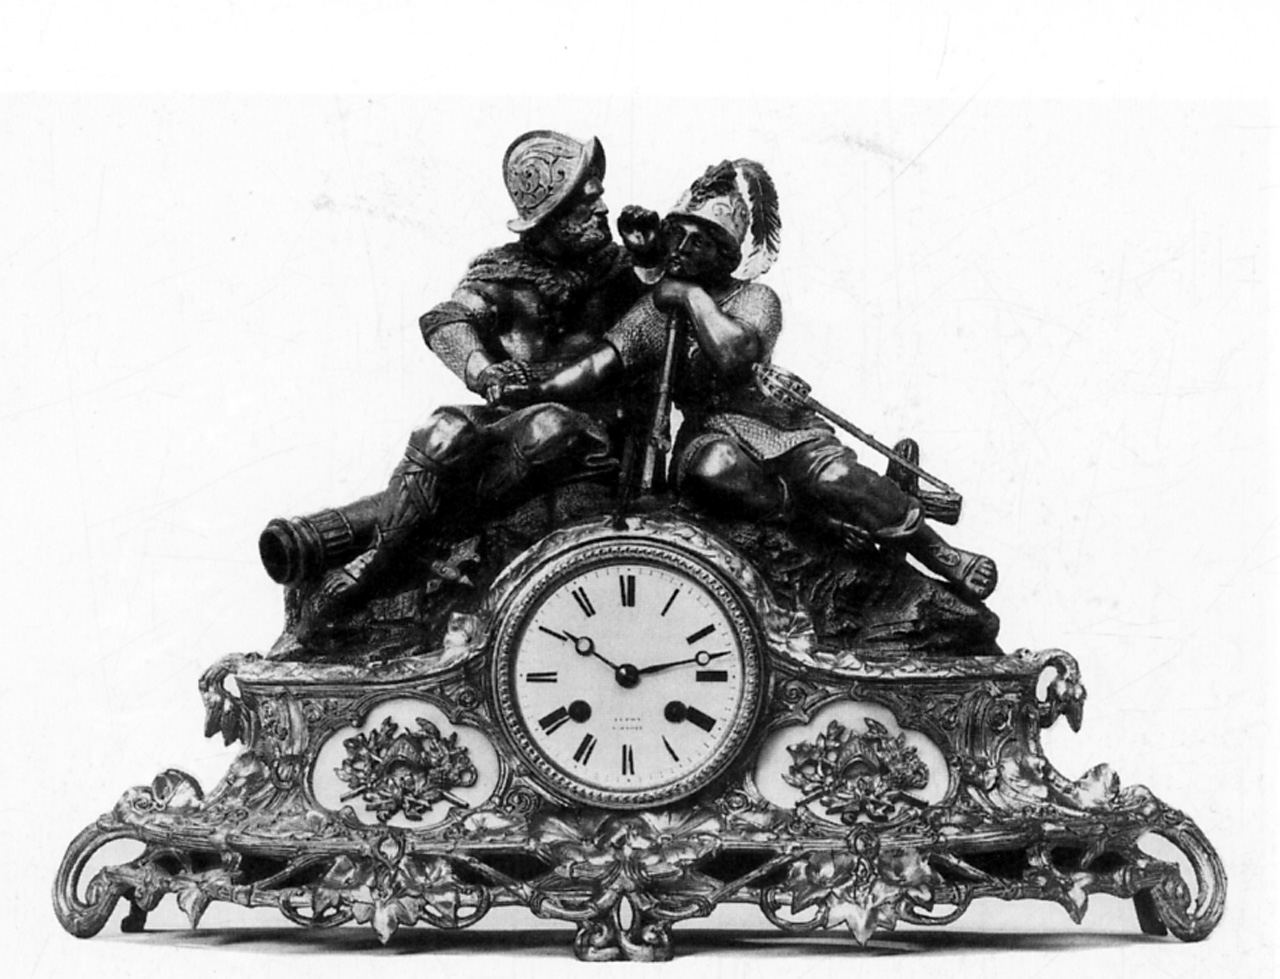 guerrieri con un trofeo d'armi (orologio - da mensola, opera isolata) di Japy Frères, Hottot, Le Roy - manifattura parigina (terzo quarto sec. XIX)